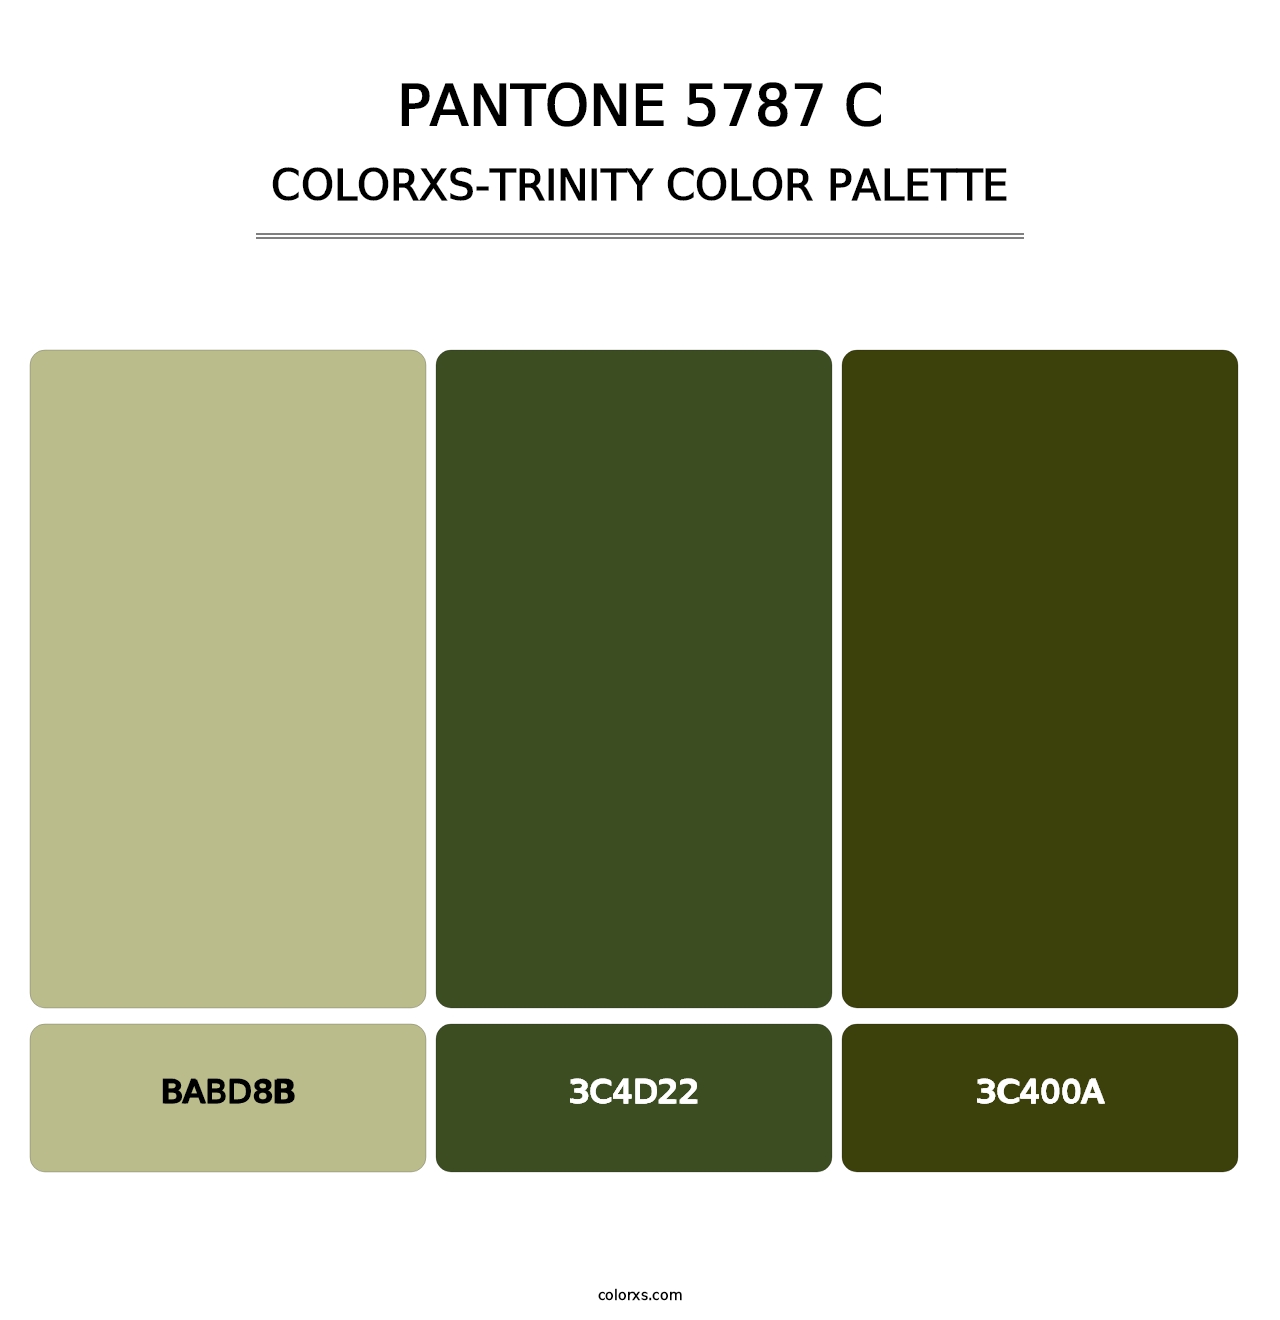 PANTONE 5787 C - Colorxs Trinity Palette